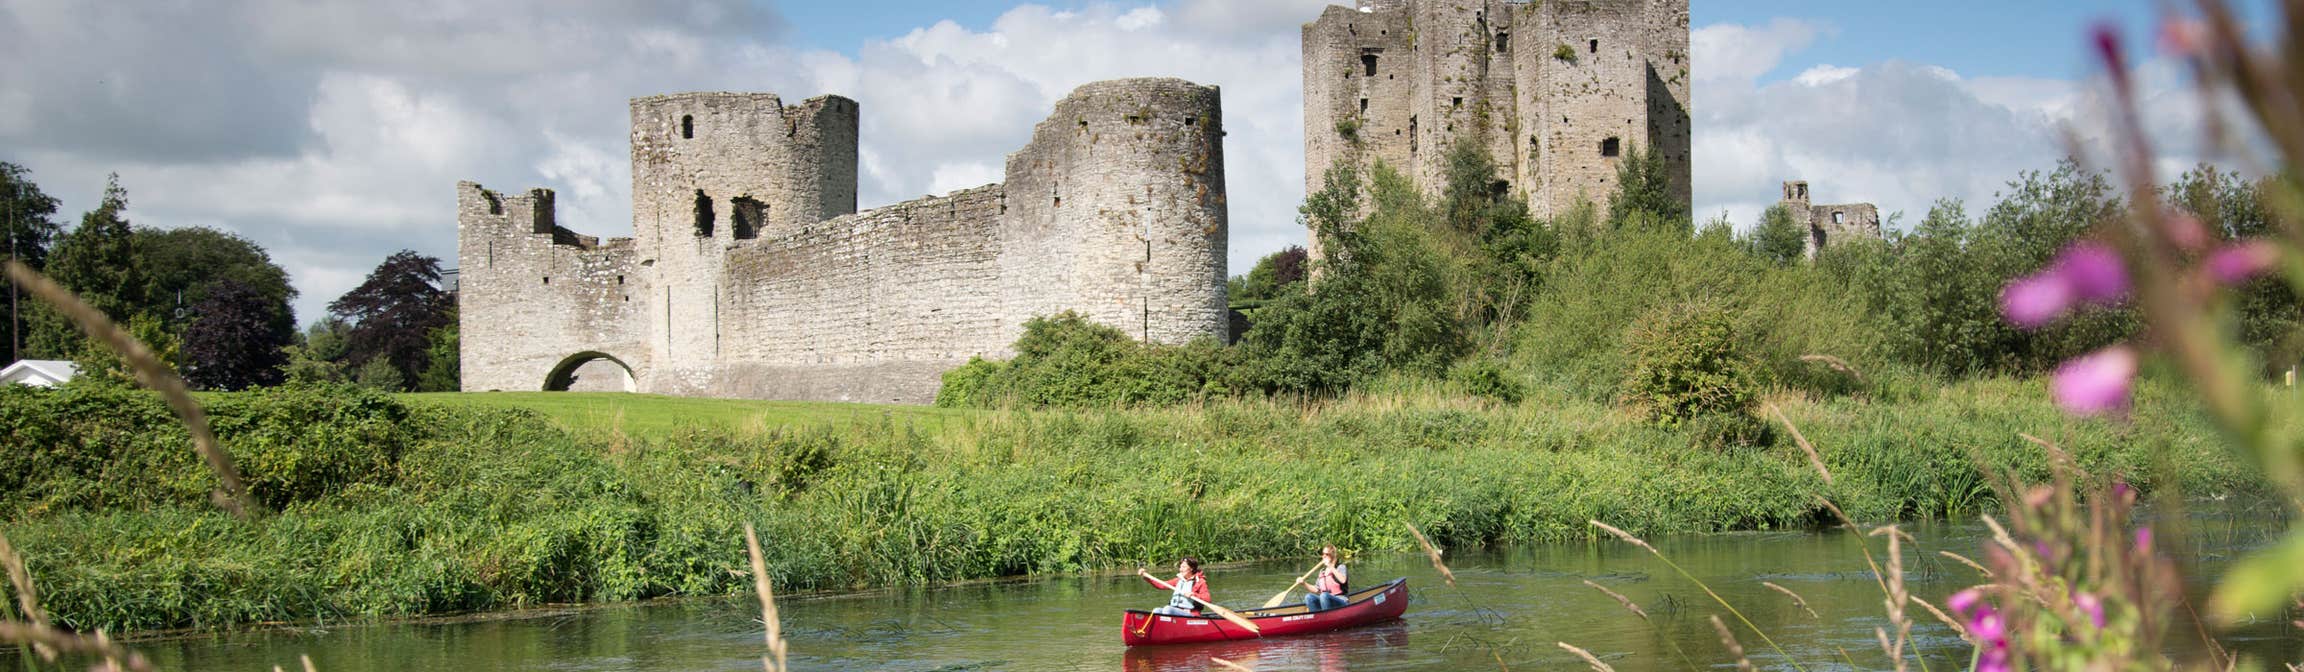 Image of Trim Castle on River Boyne, County Meath